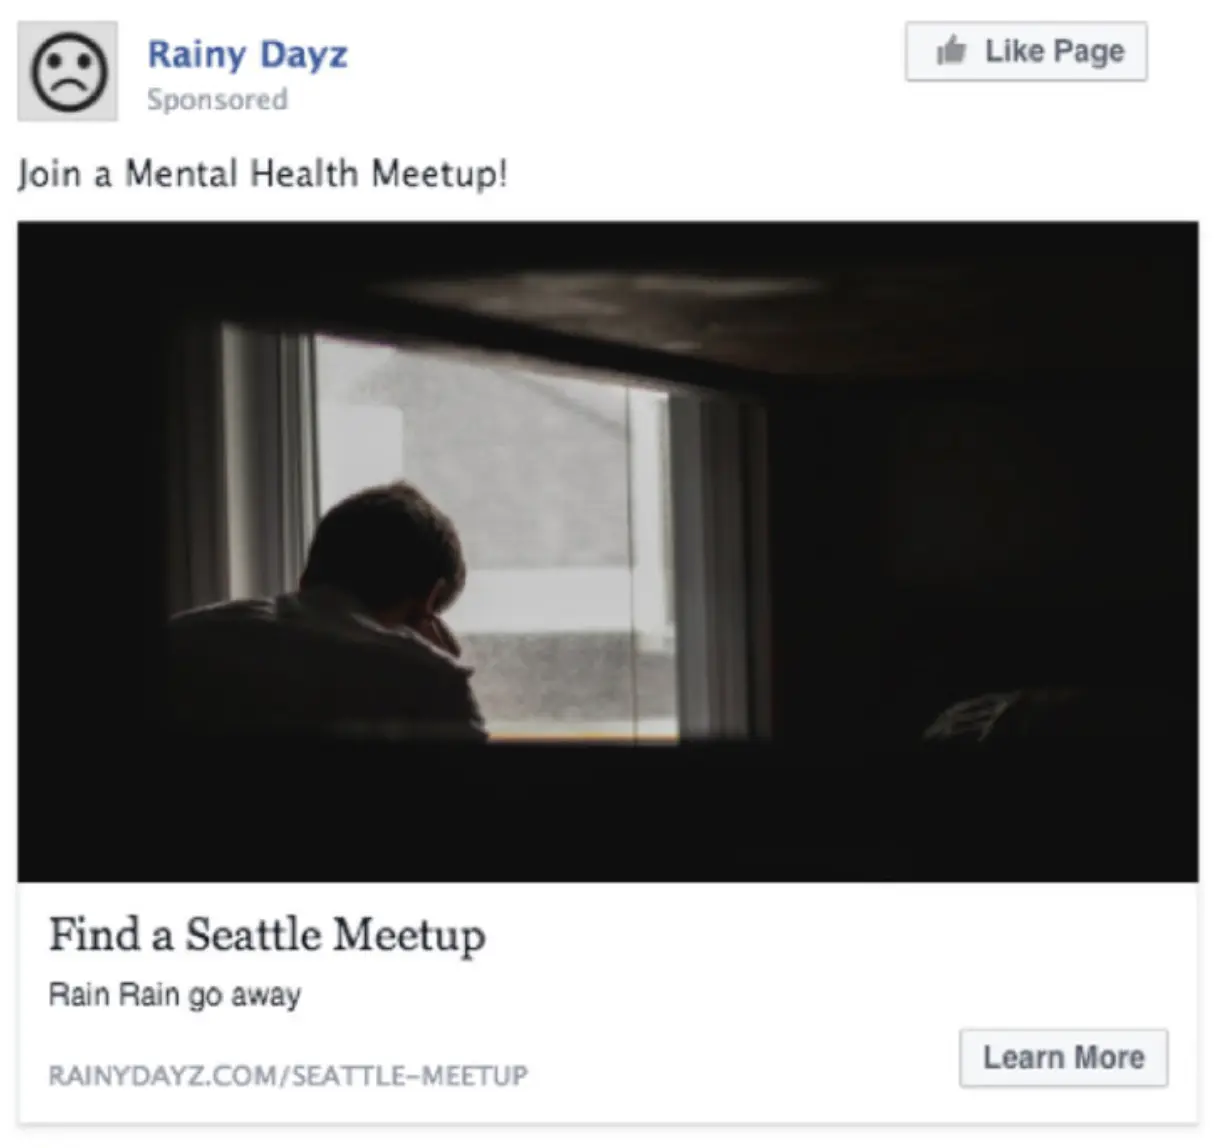 bad facebook ads examples rainy dayz